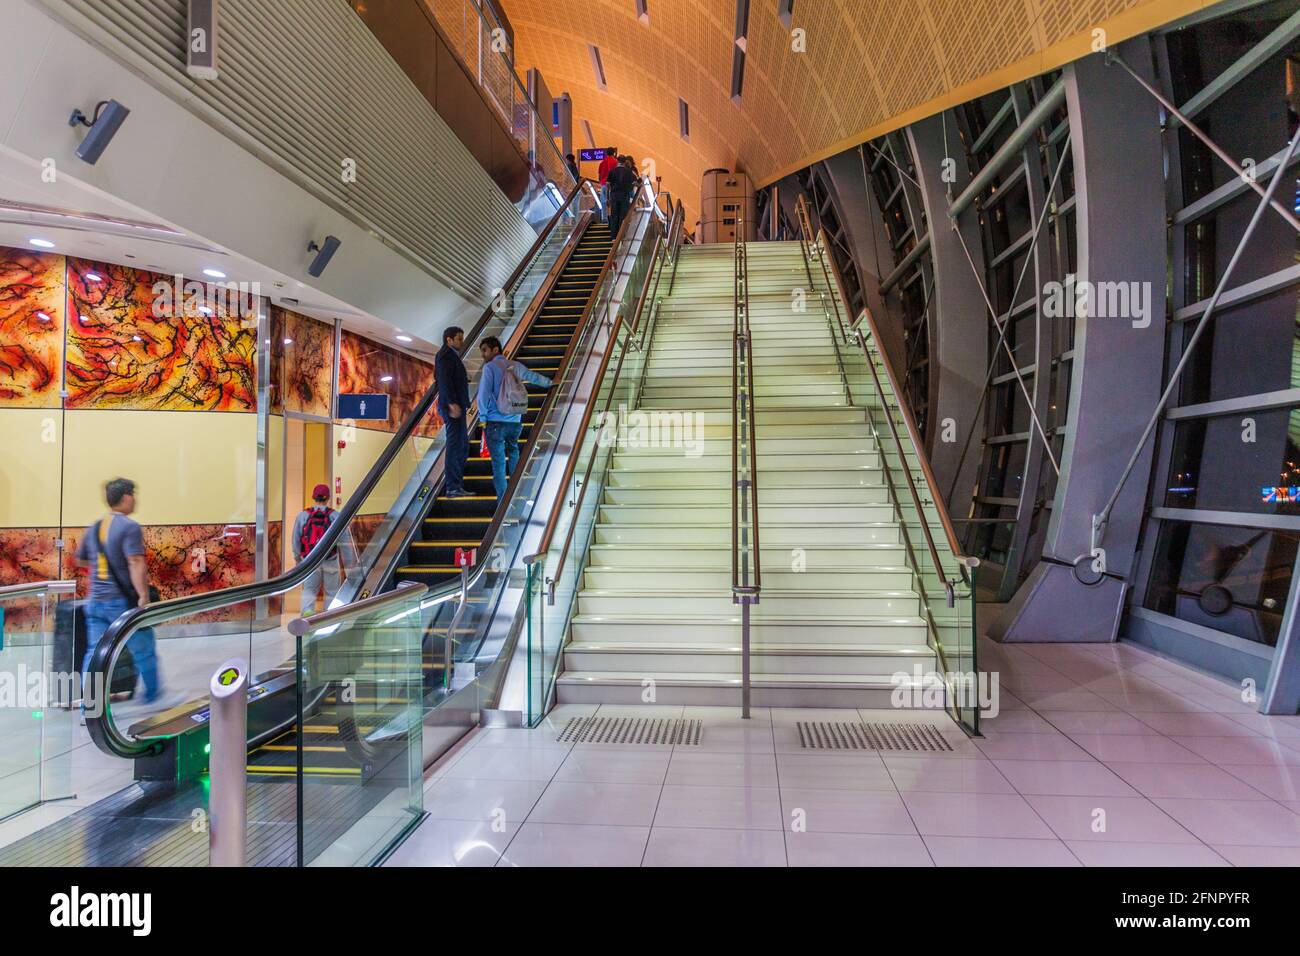 DUBAI, UAE - MARCH 11, 2017: Escalators at a metro station in Dubai, UAE. Stock Photo